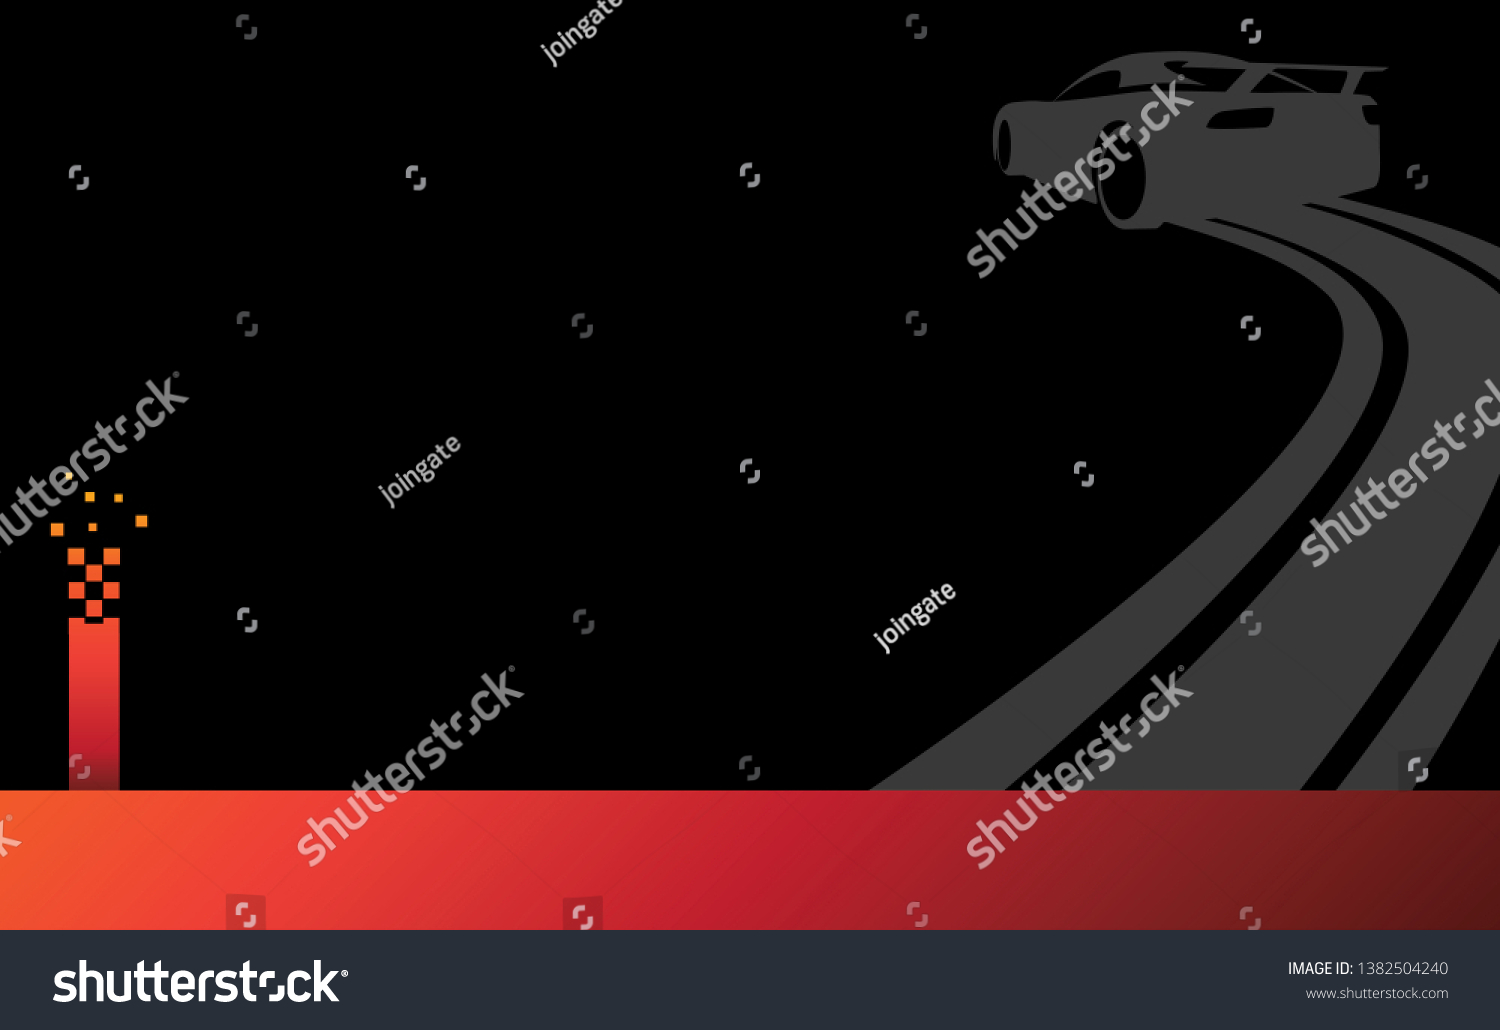 SVG of Vector illustration of a car sliding or drifting on a black background,  svg